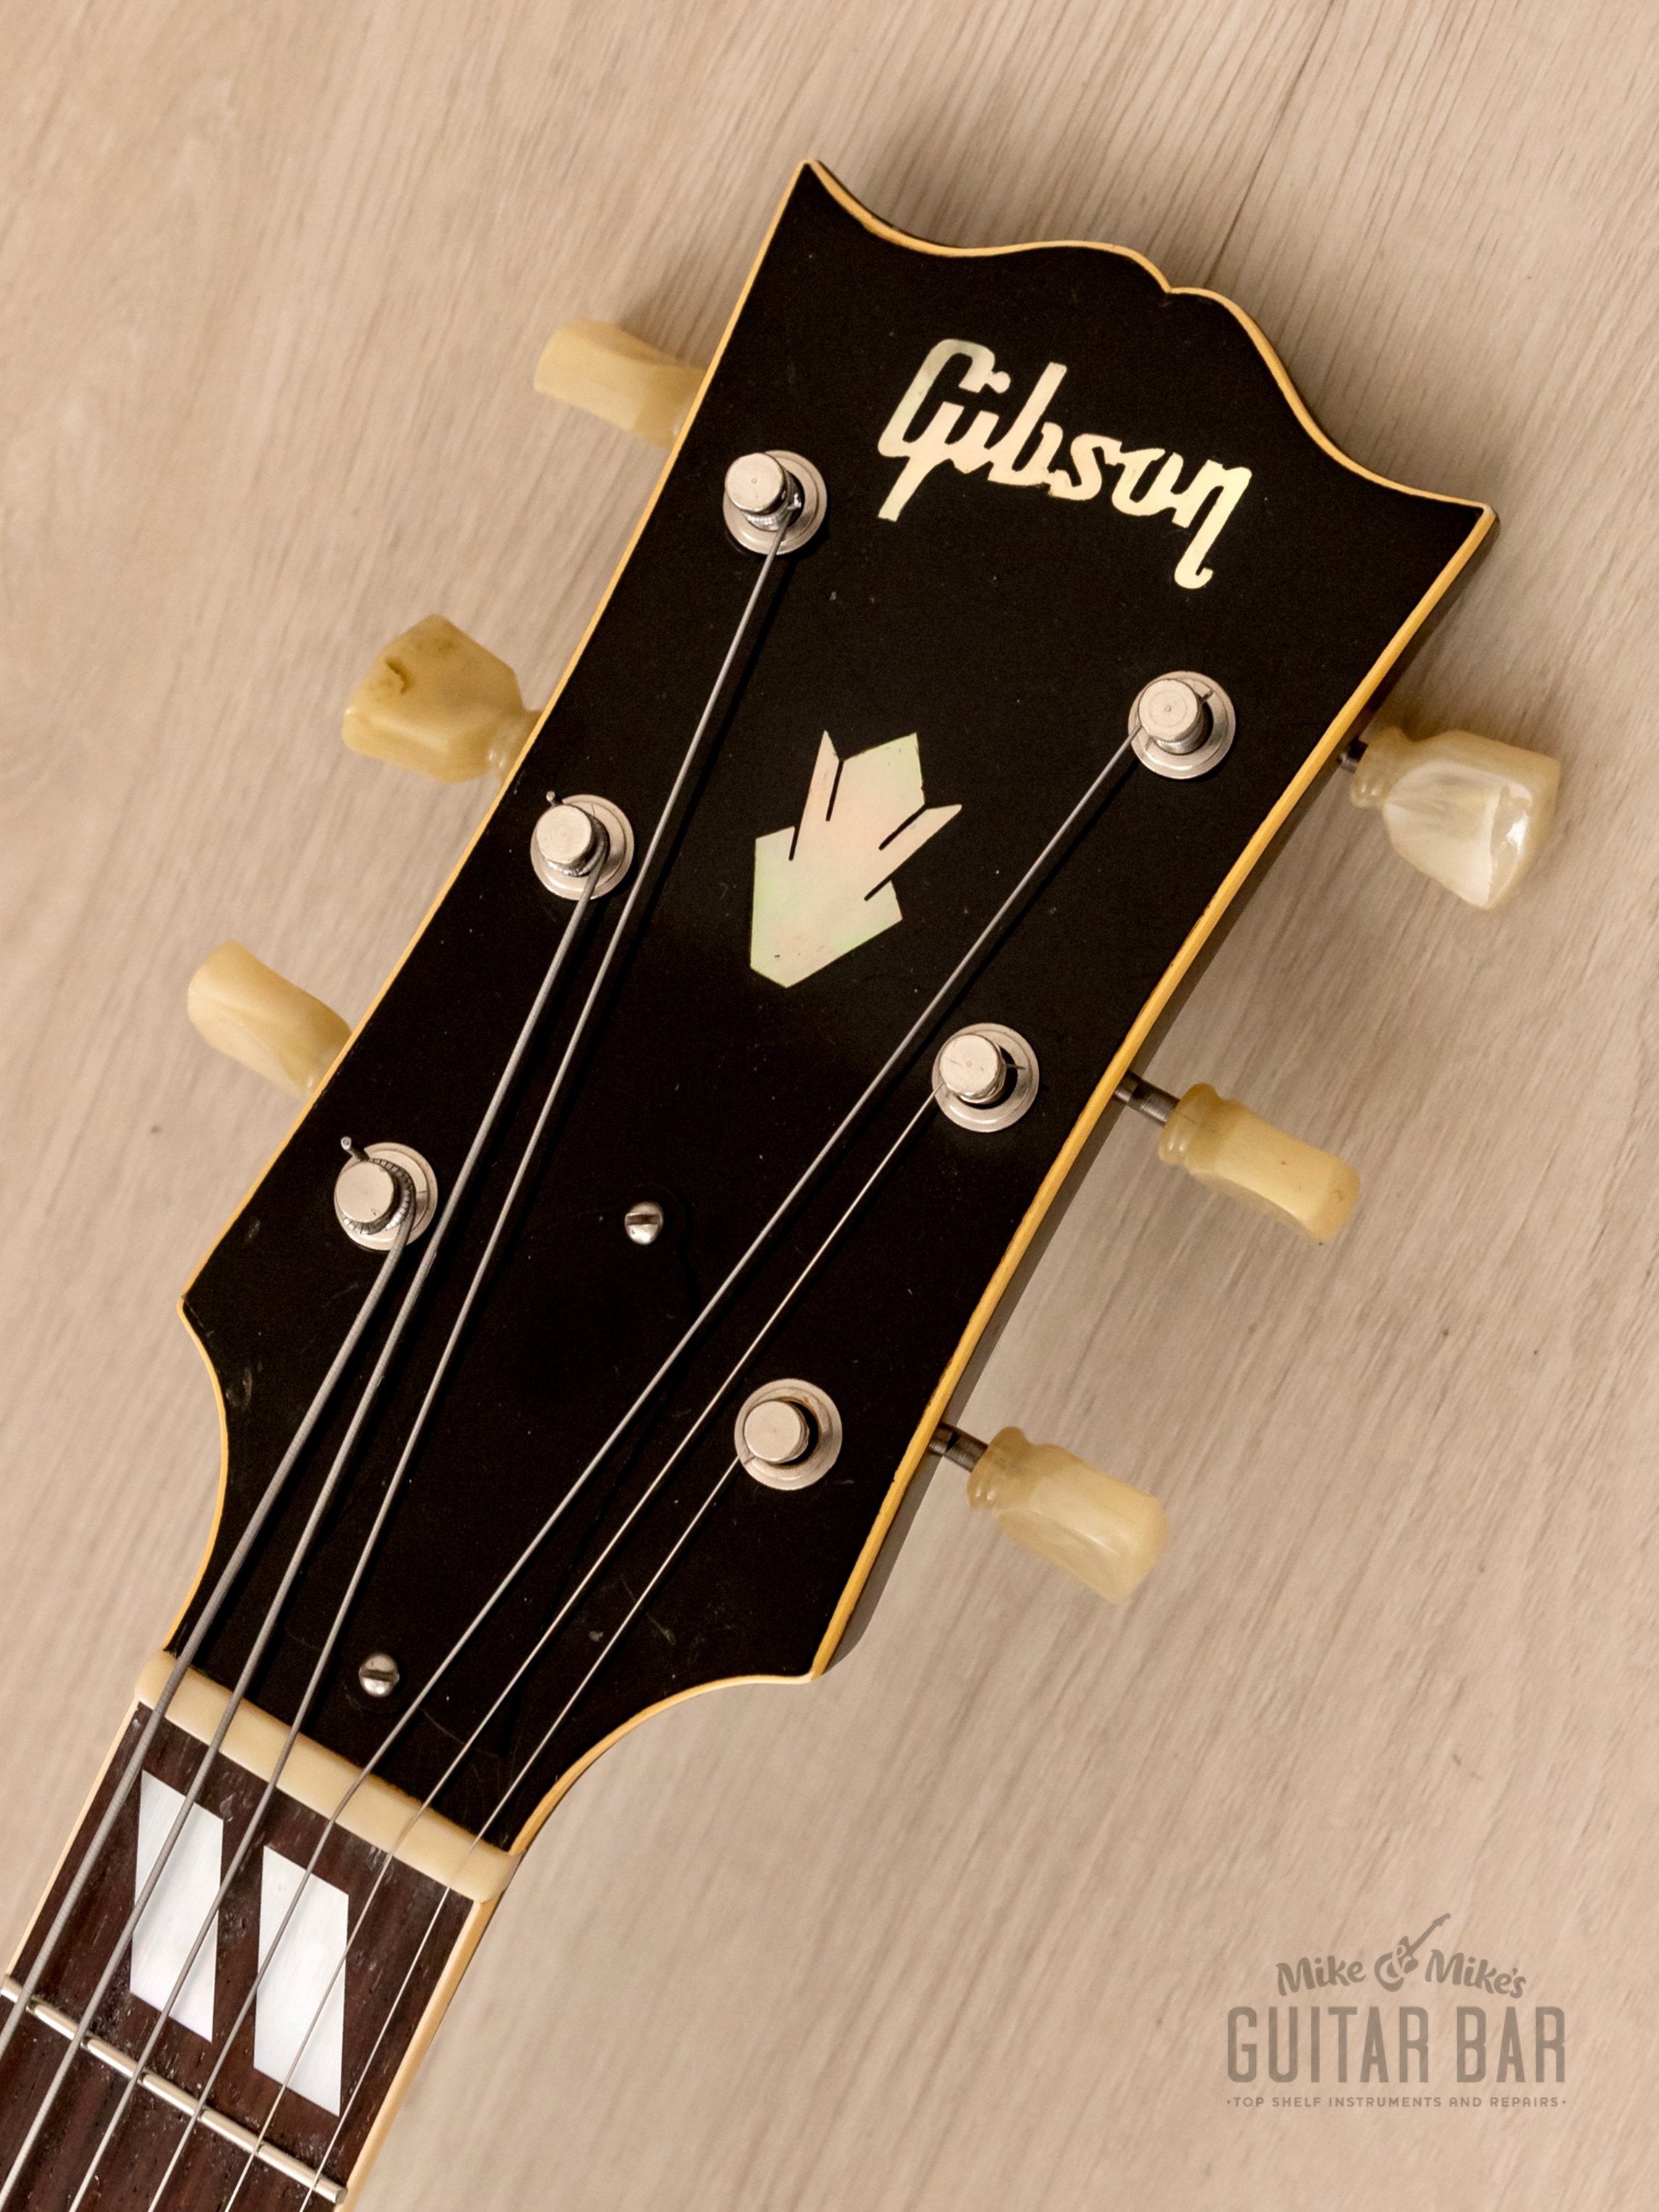 1951 Gibson L-7C Vintage Archtop Guitar w/ Double McCarty Pickguard, Lifton Case